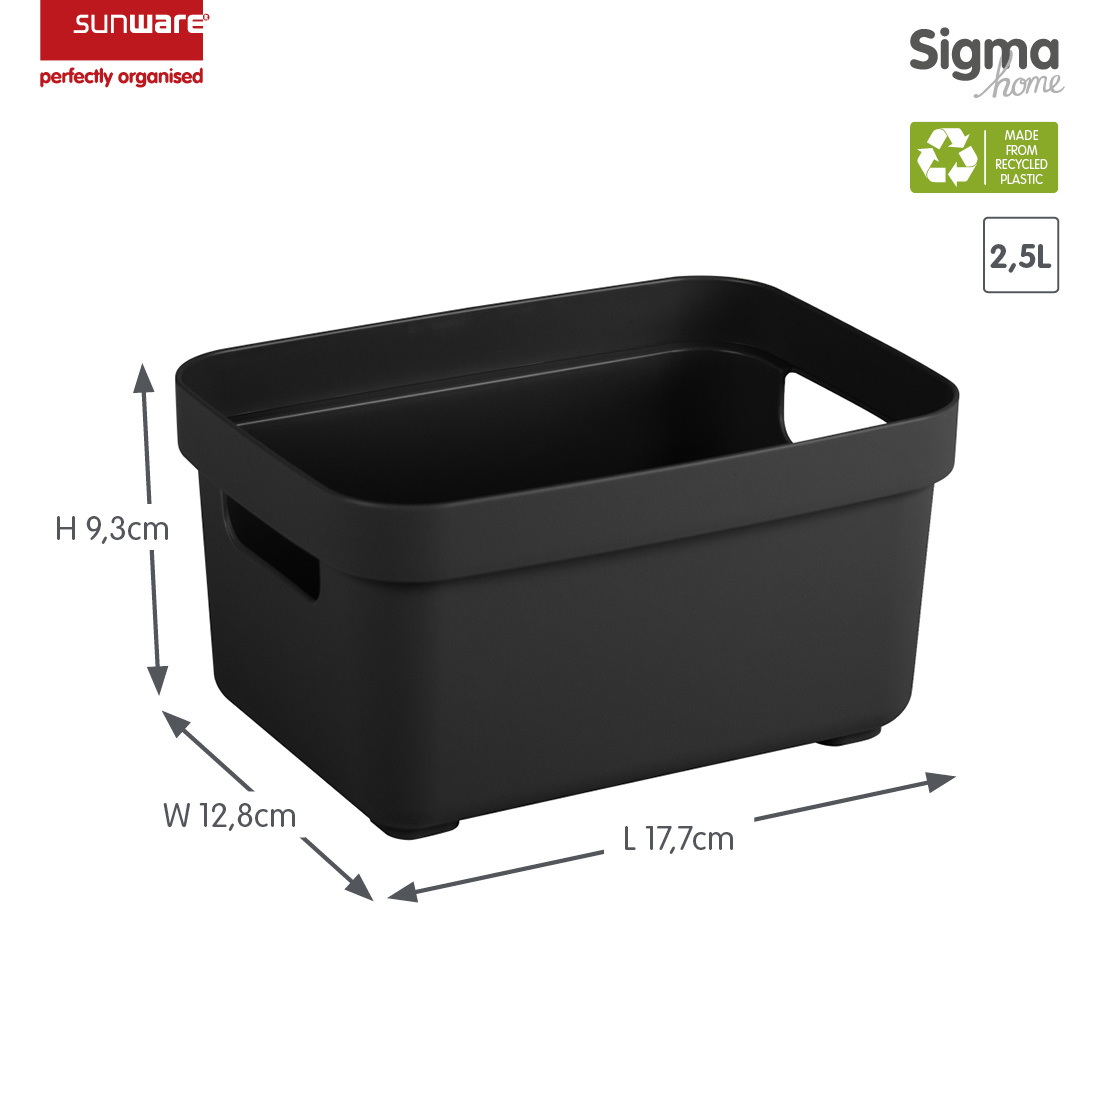 Sigma home opbergbox 2,5L zwart